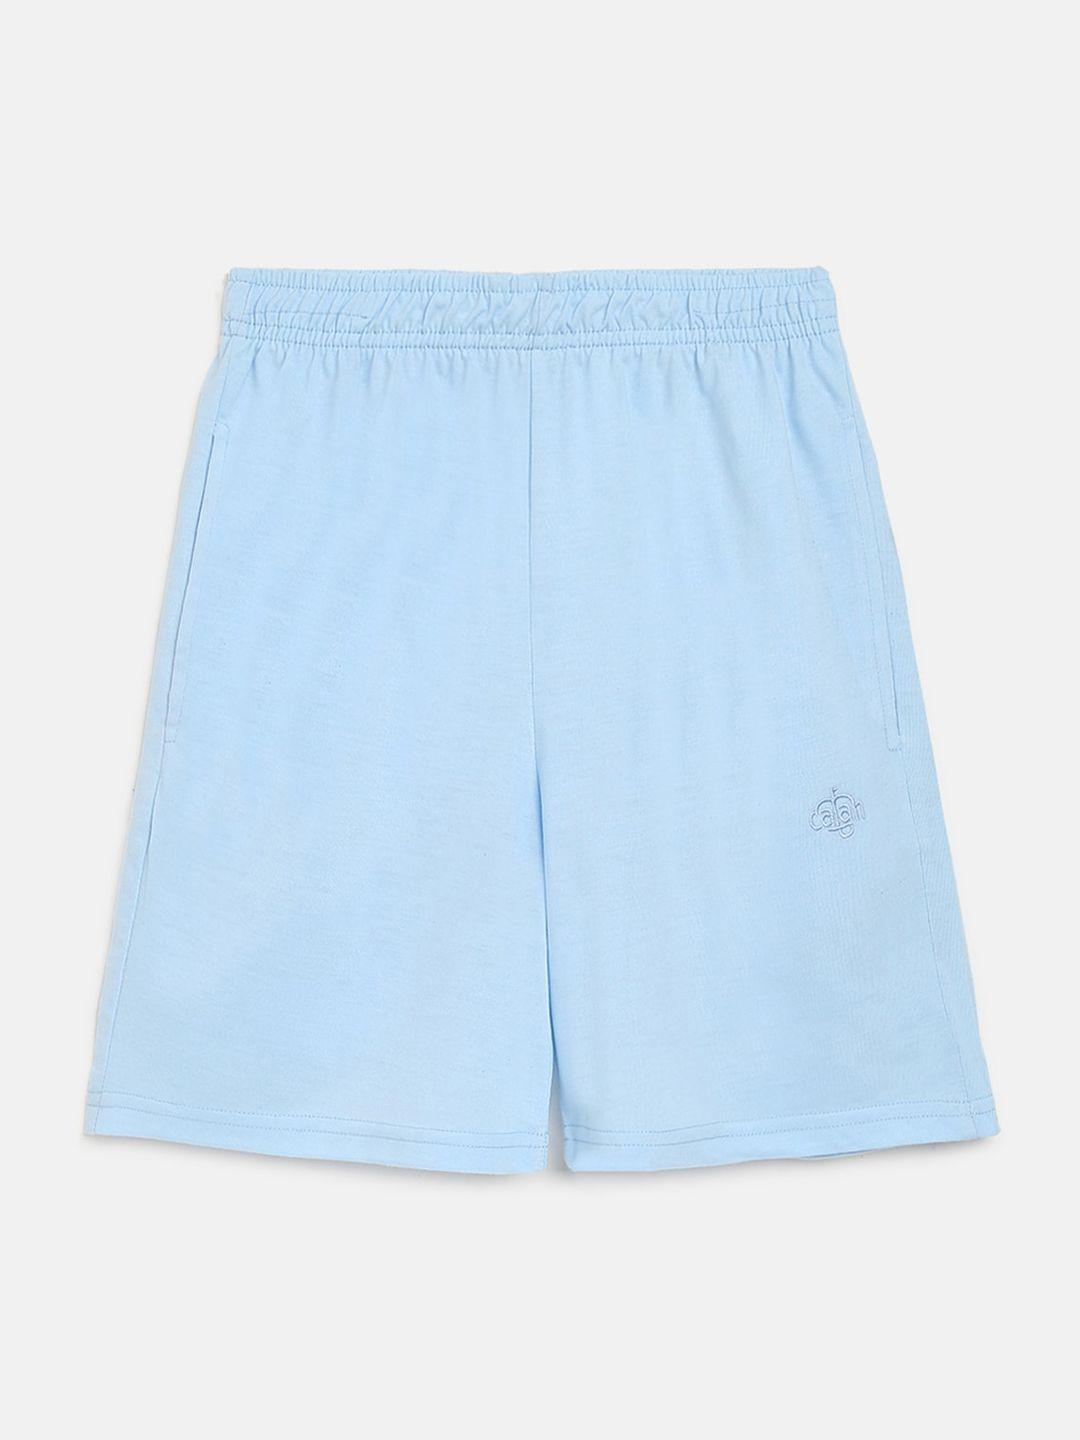 chimprala boys blue solid regular fit cotton sports shorts